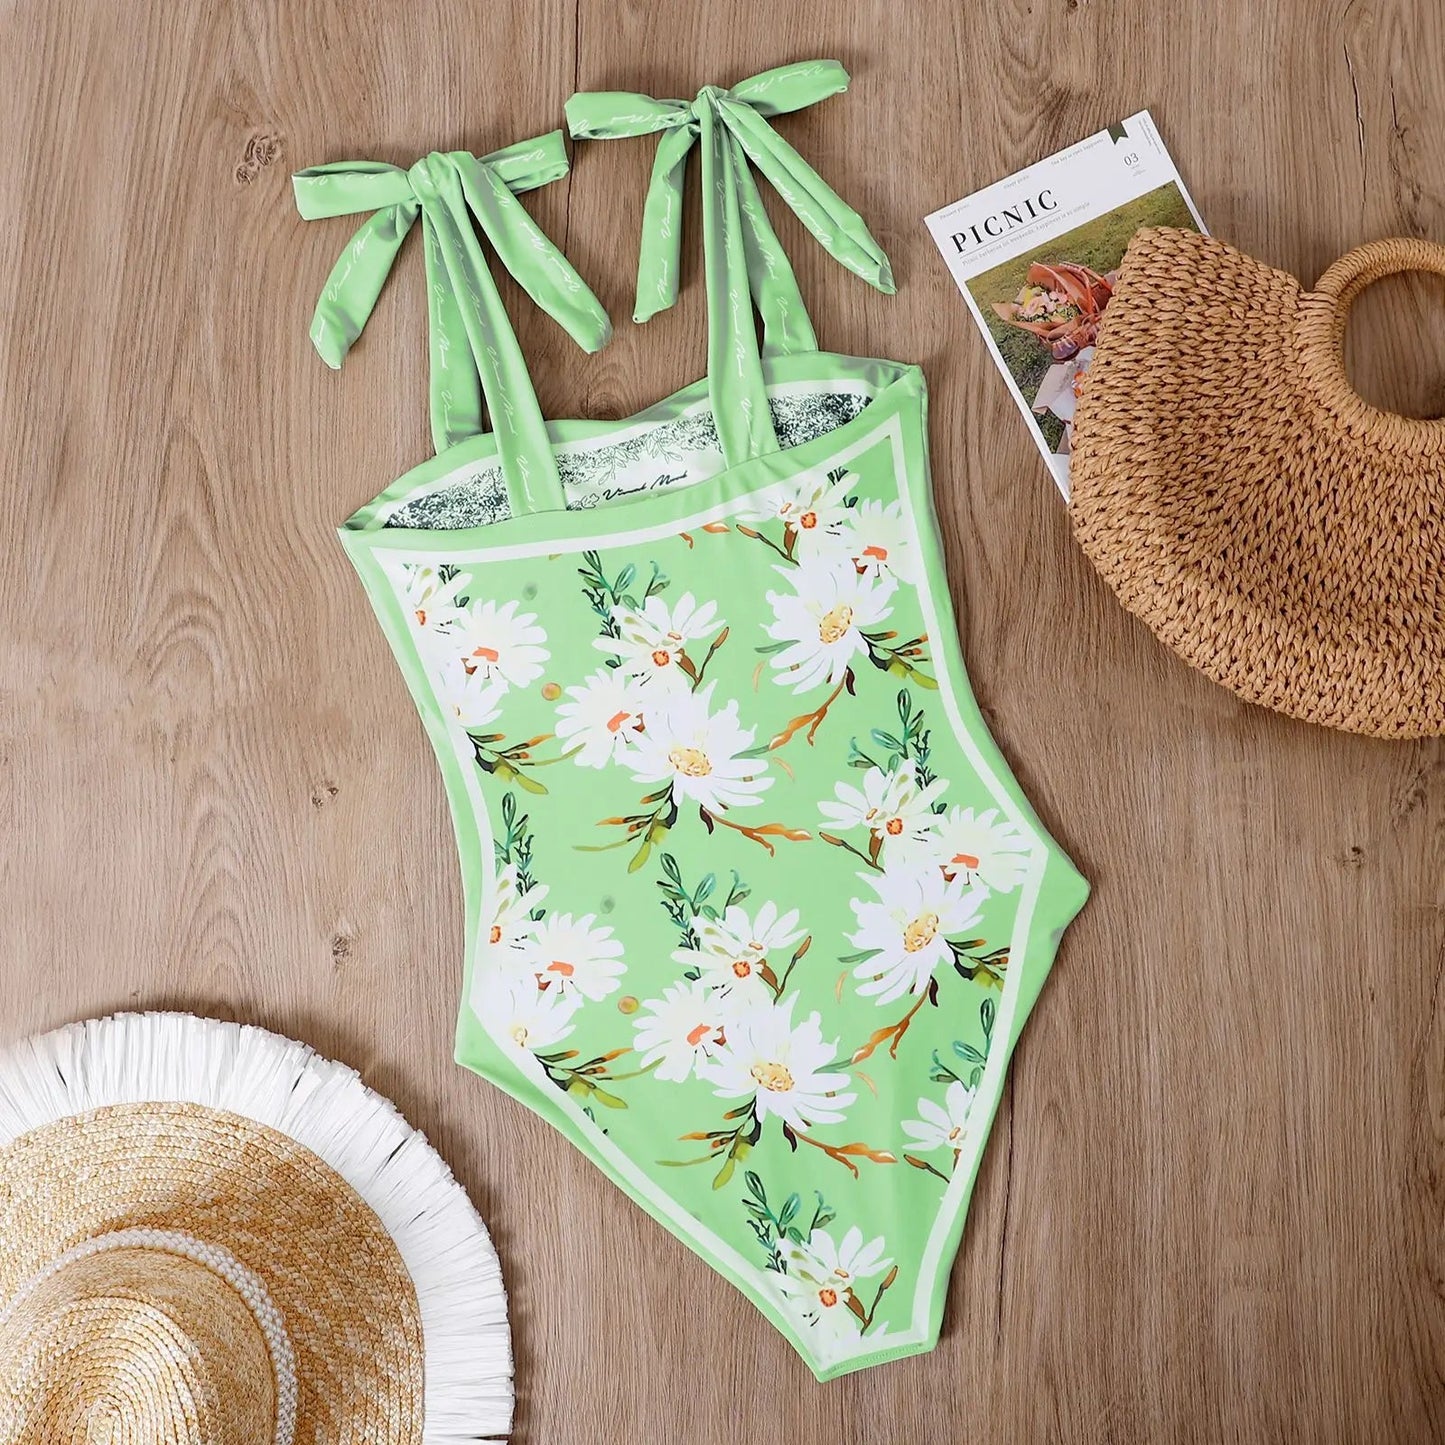 
                  
                    Cikini Swimwear New Double Sided Printing Two Side Swimsuit Women's Retro Floral One-Piece Summer Beach BikiniK&F
                  
                